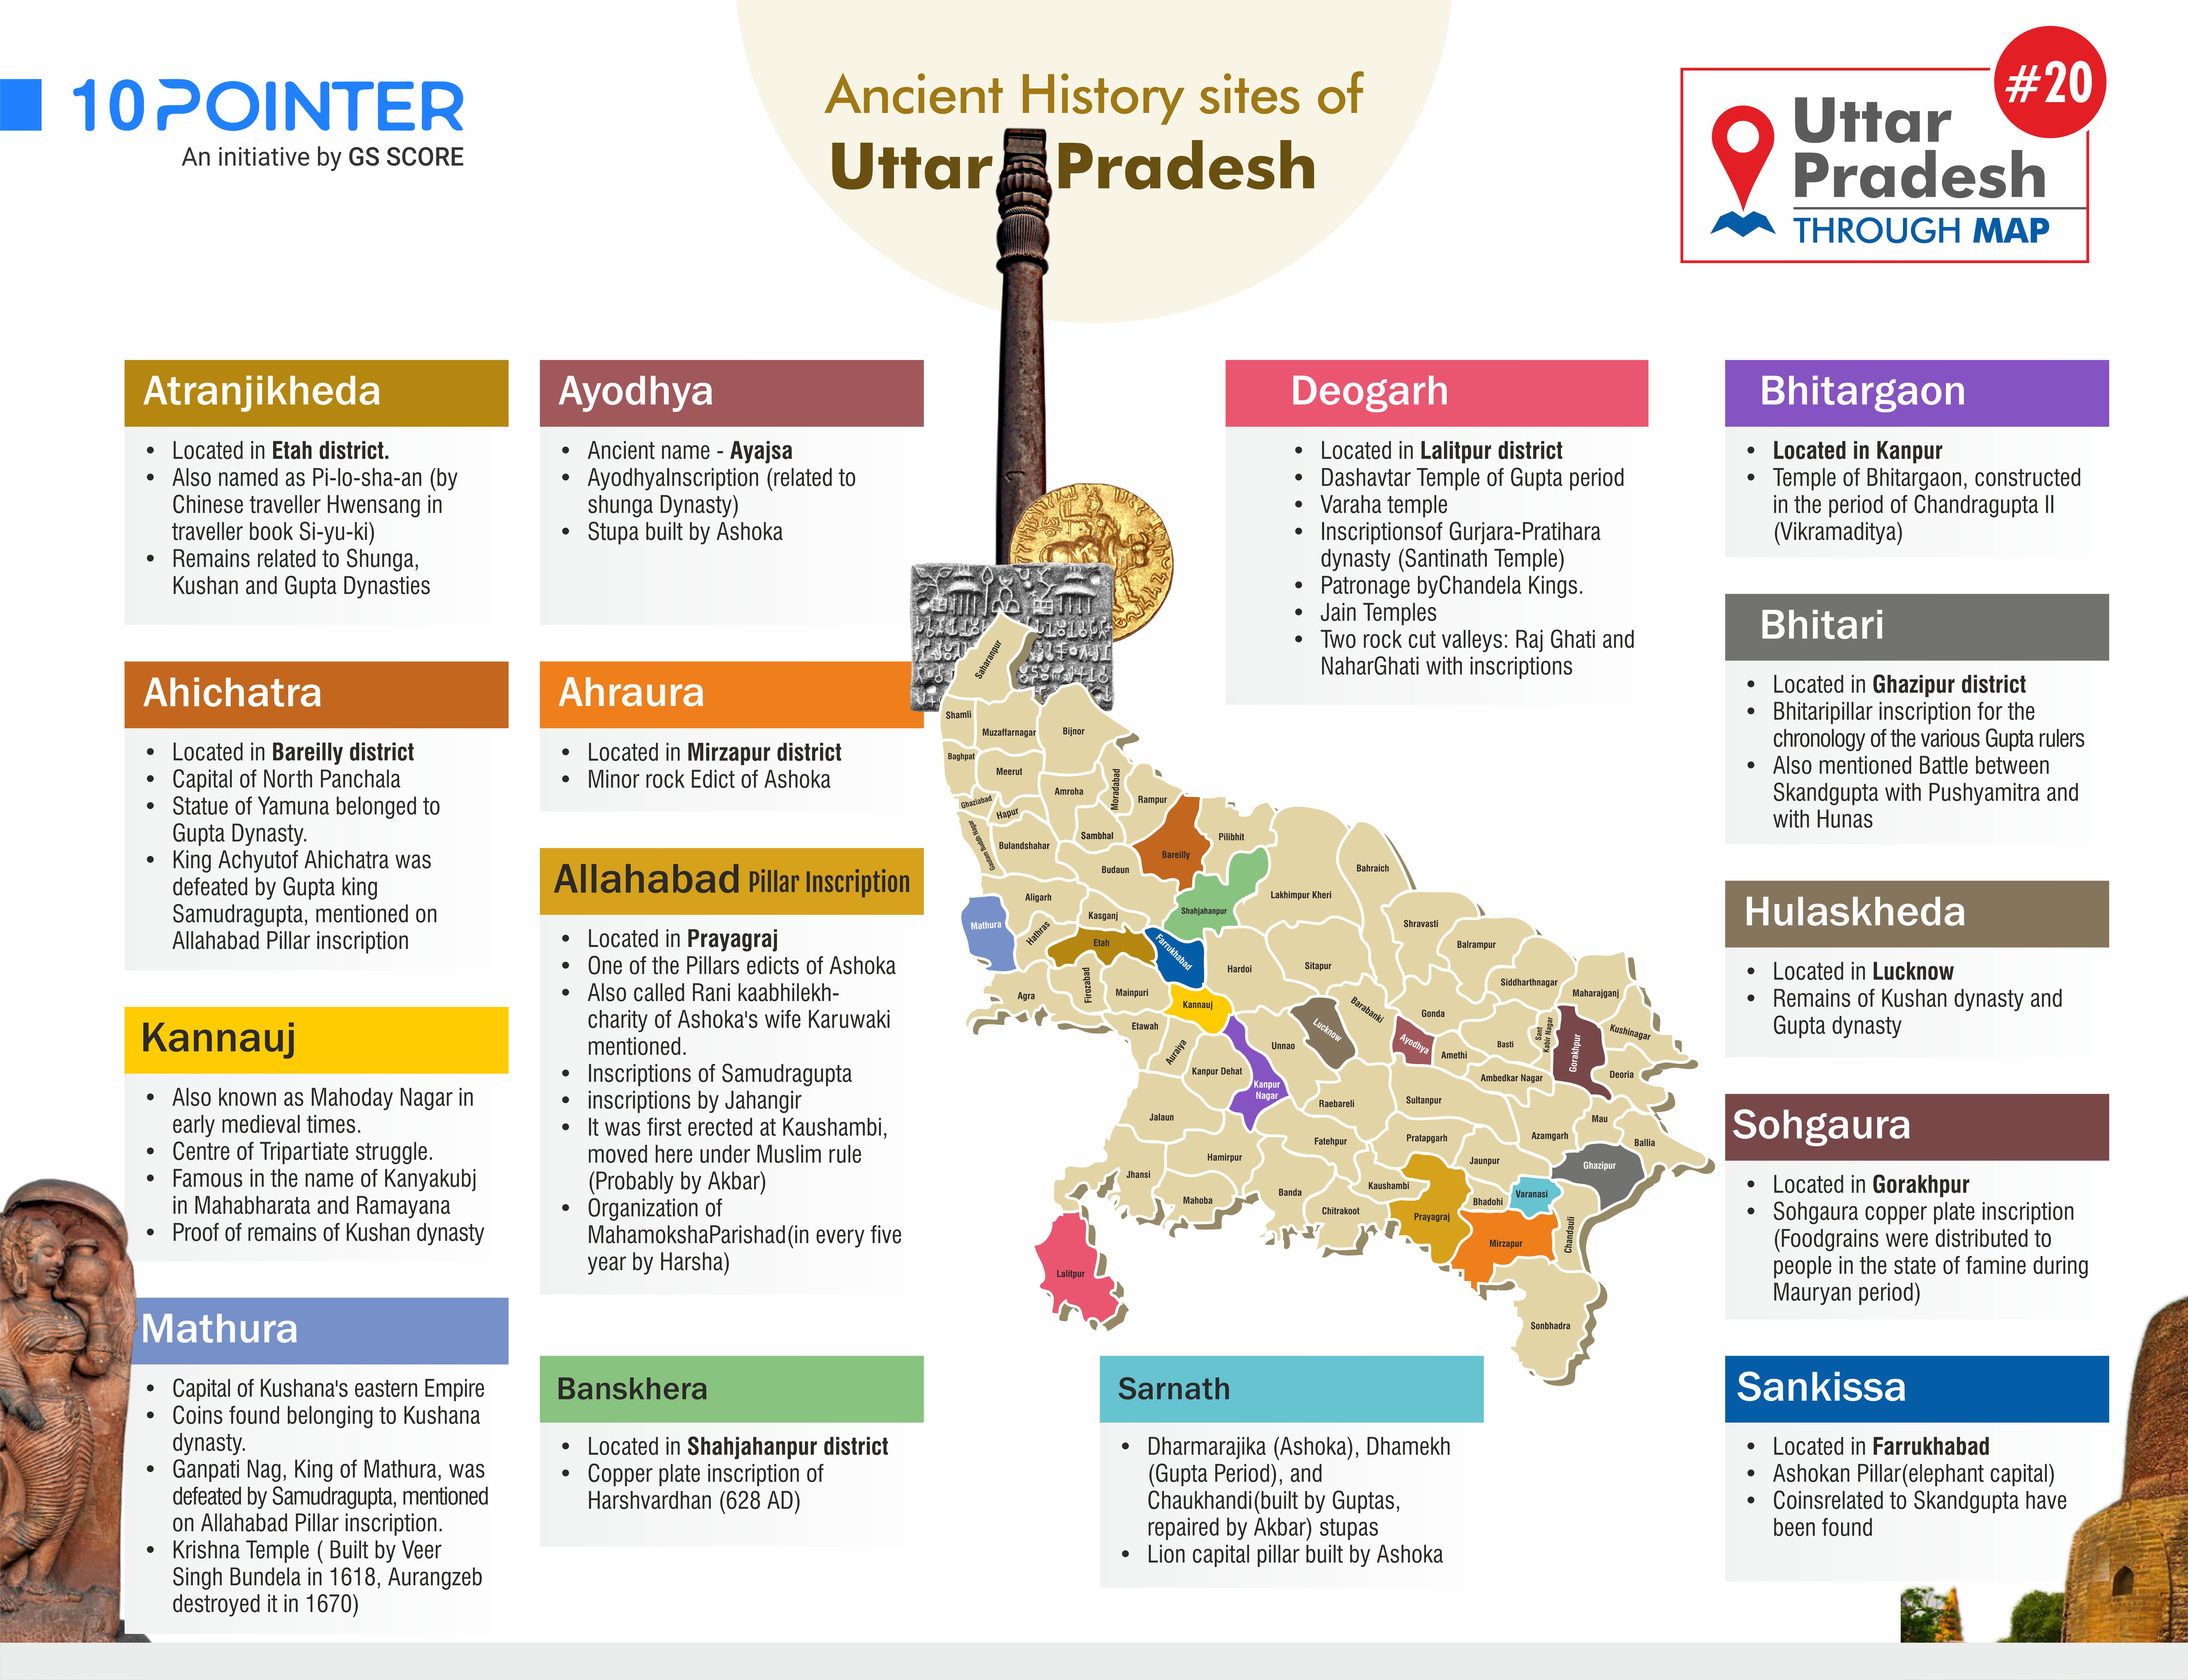 Ancient History Sites of Utter Pradesh